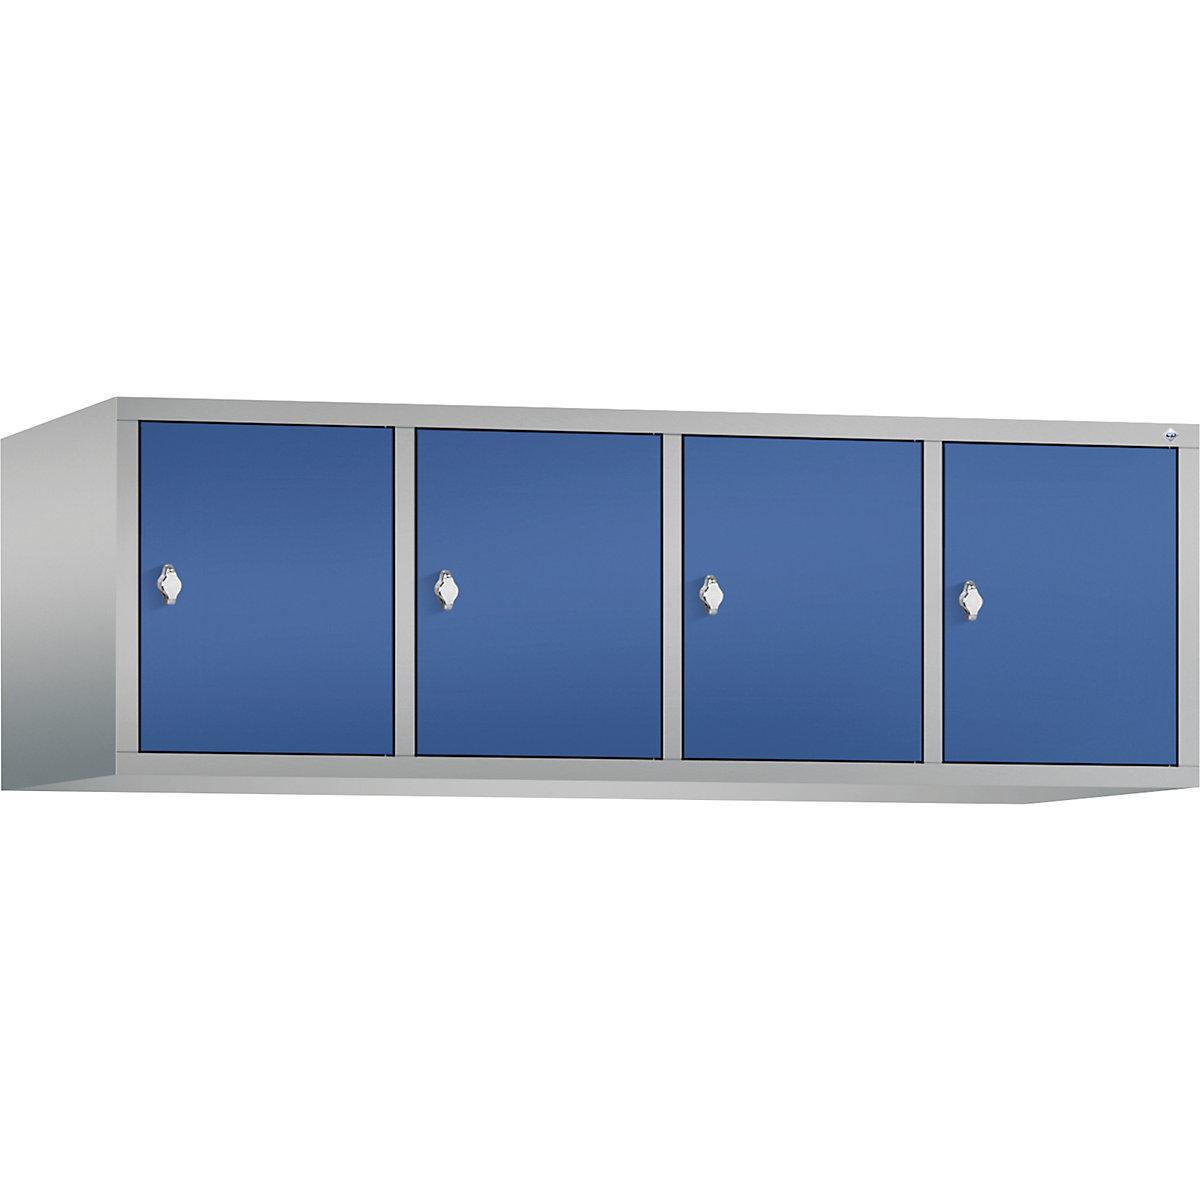 C+P – Altillo CLASSIC, 4 compartimentos, anchura de compartimento 400 mm, aluminio blanco / azul genciana